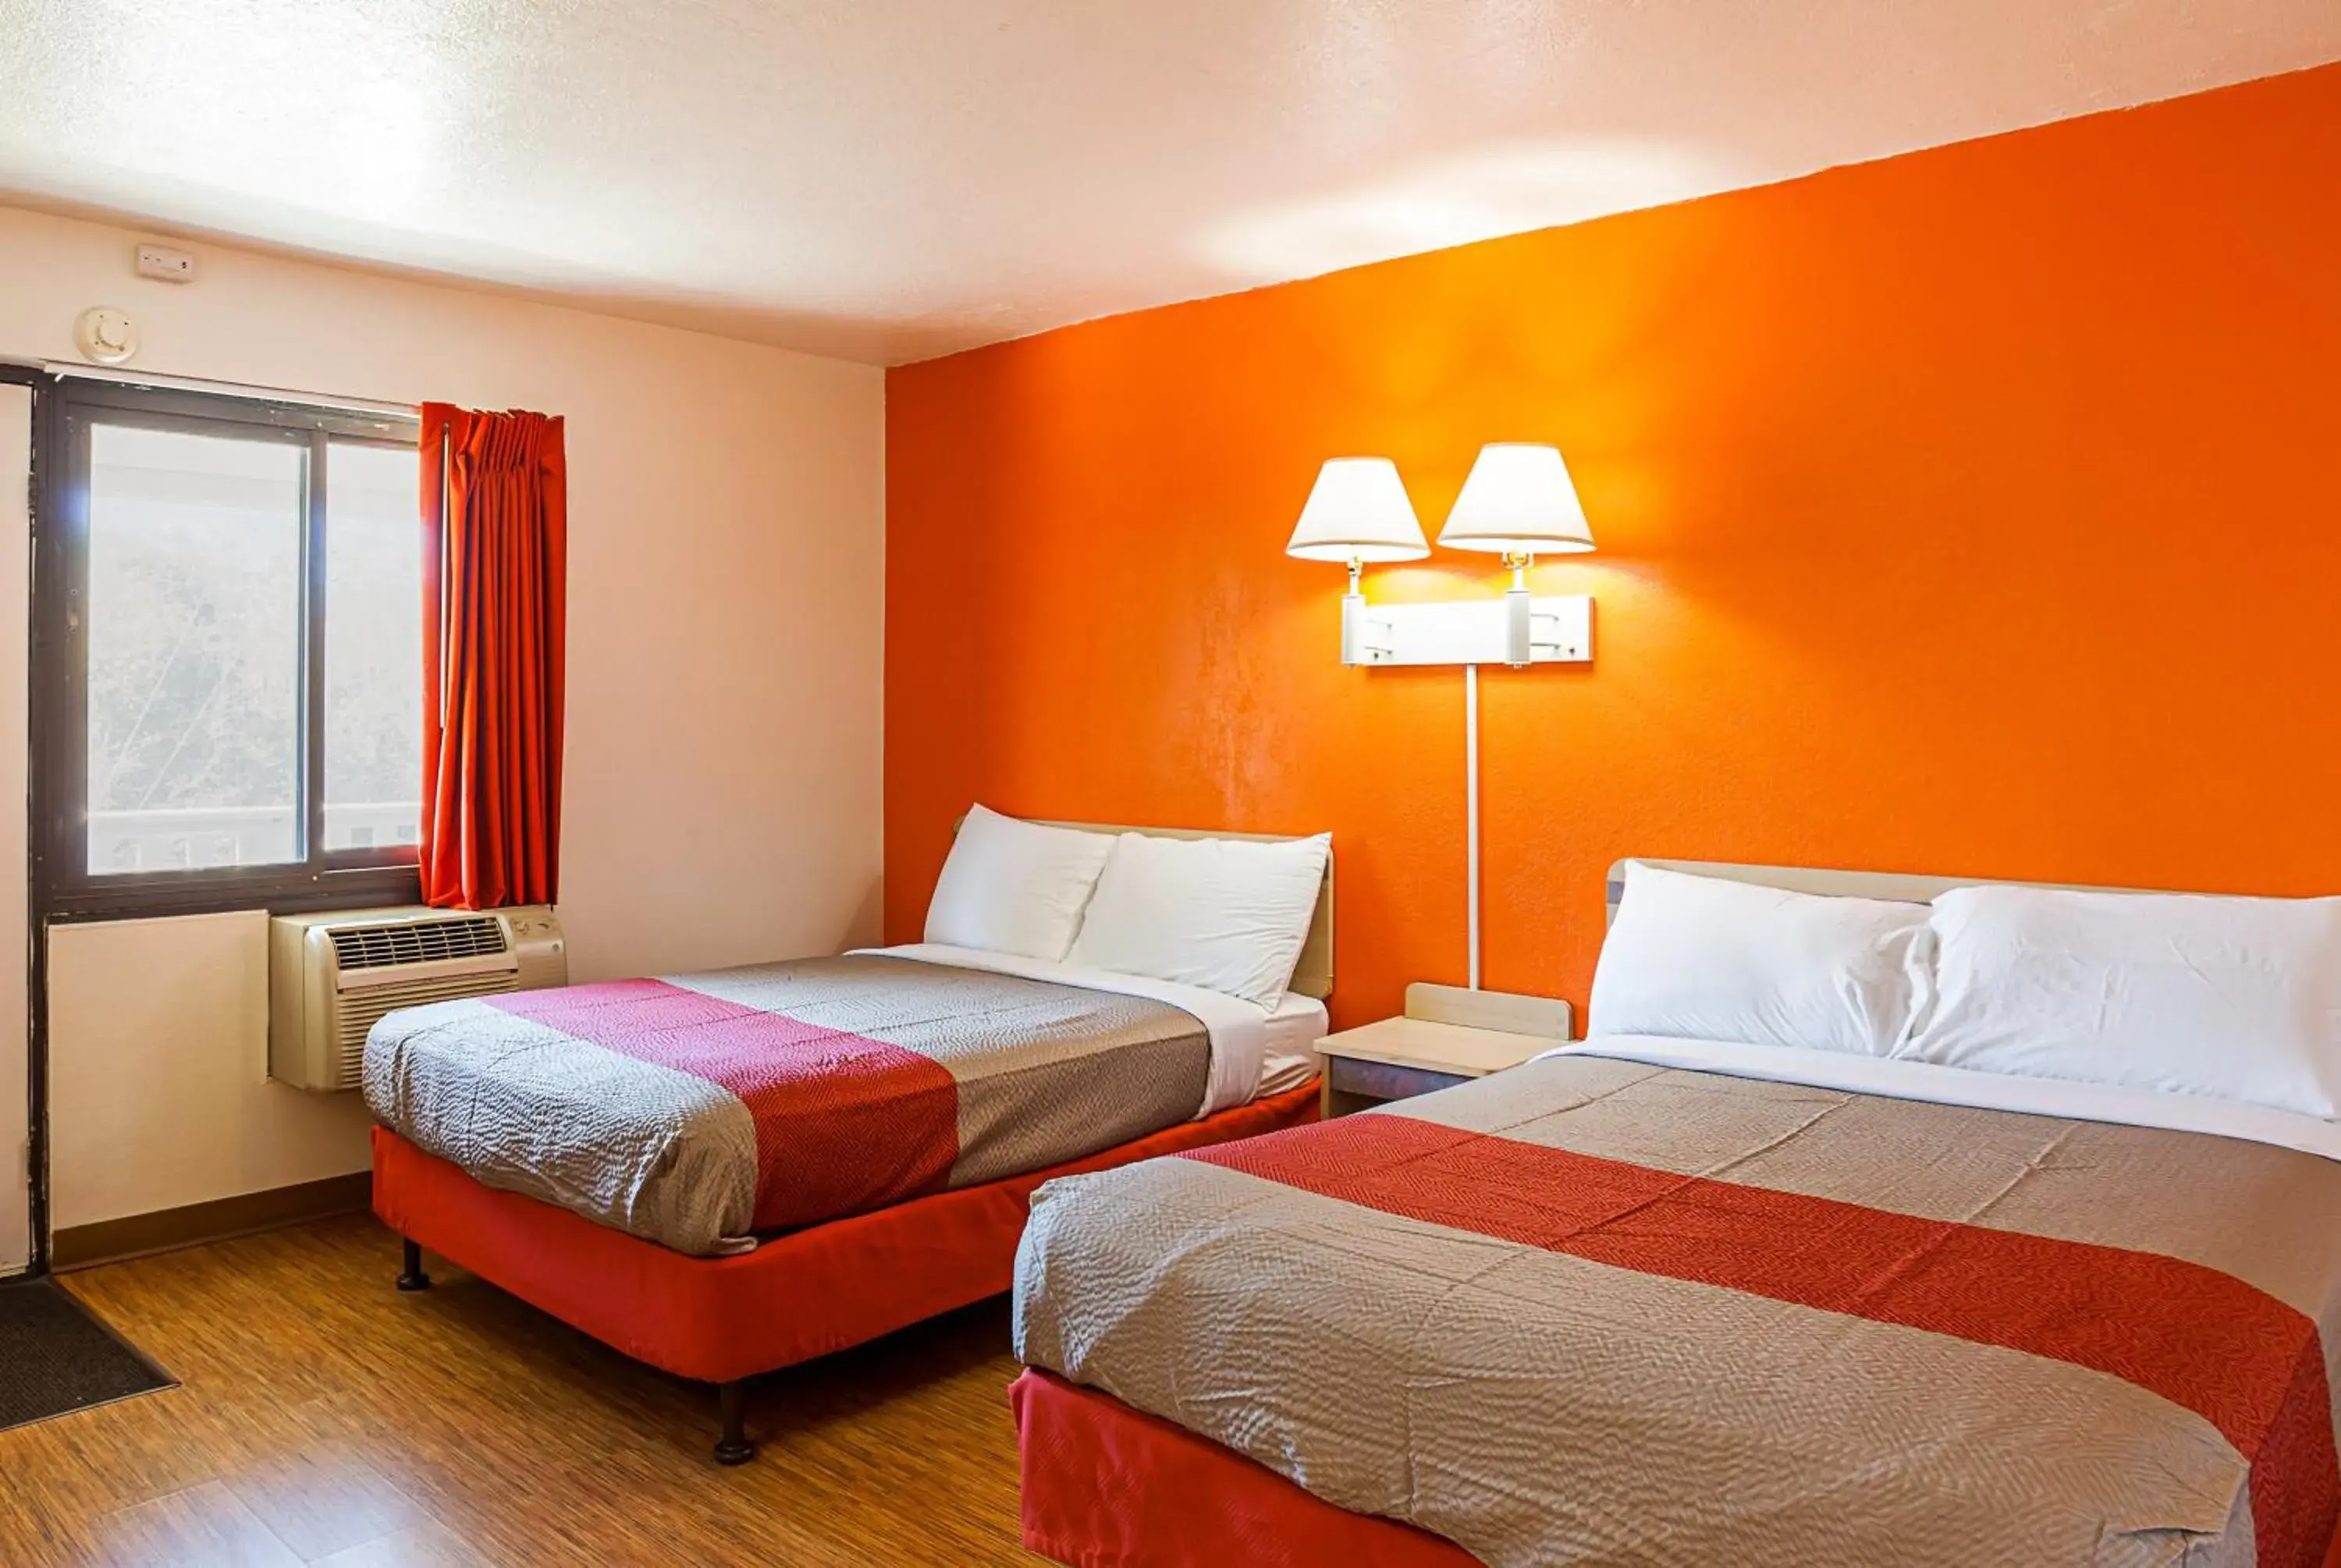 Bedroom, Room Photo in Americas Best Value Inn Bangor